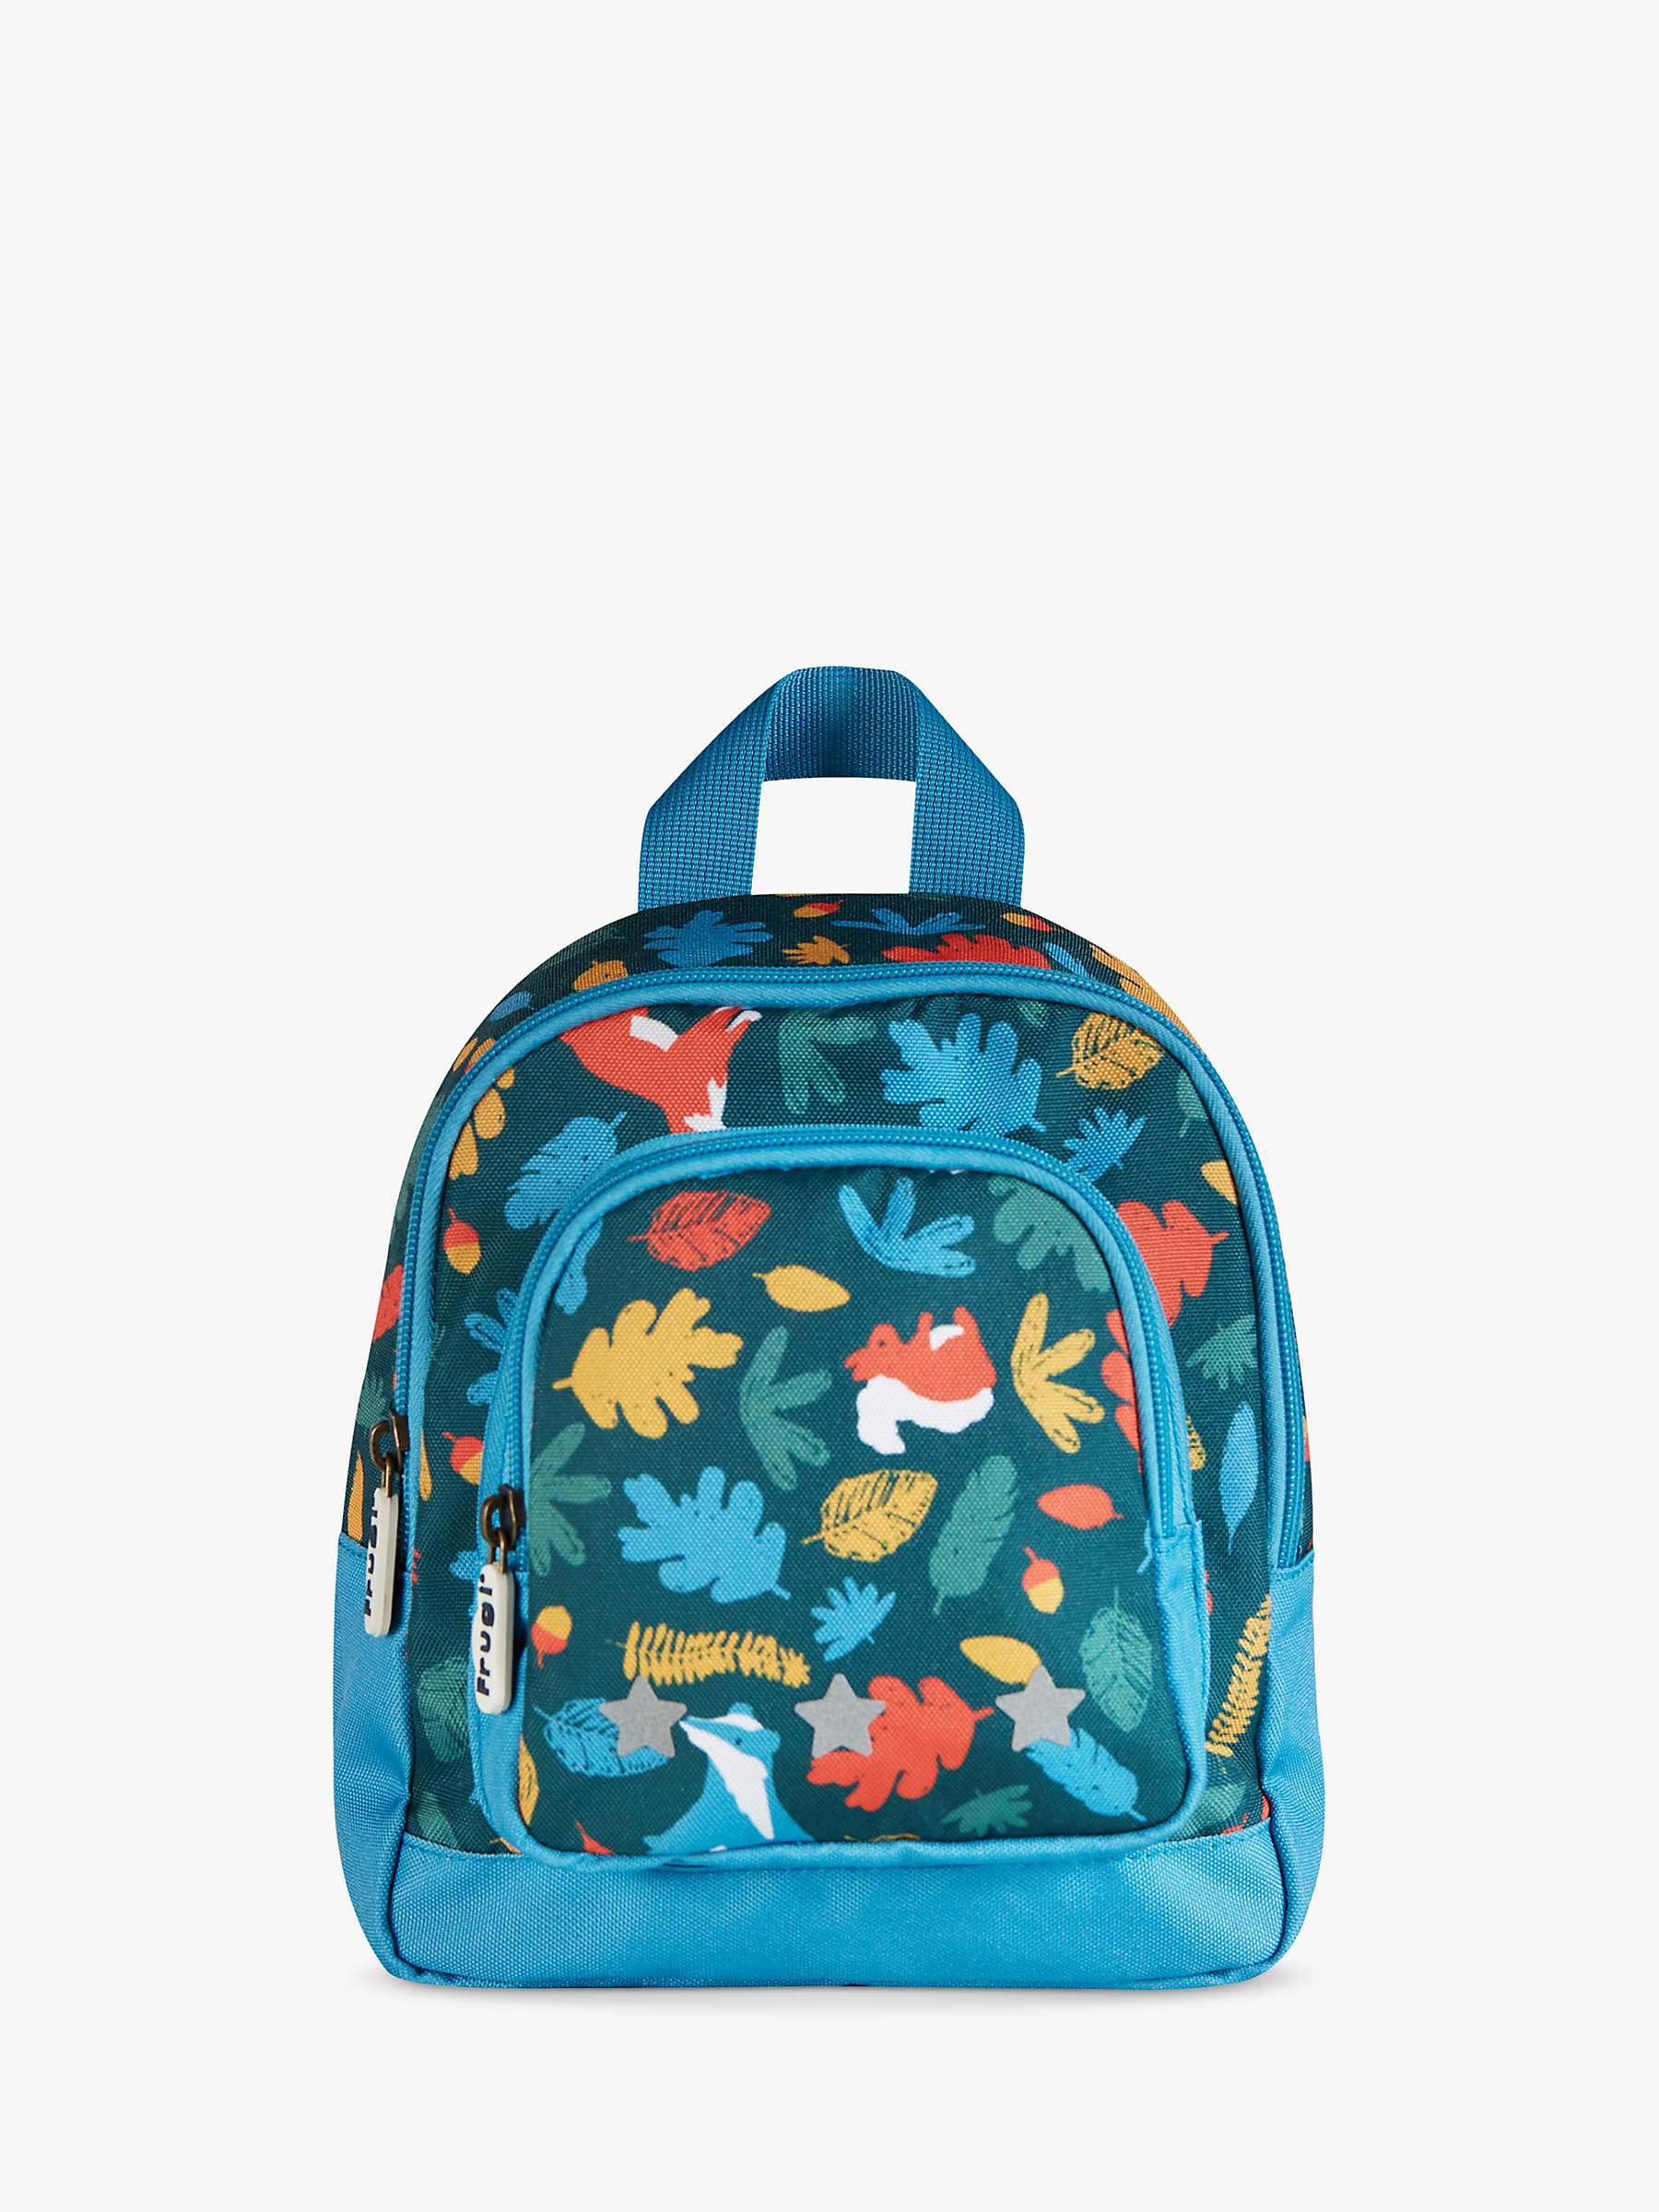 Buy Frugi Baby Little Adventurers Backpack, Fir Tree Rainbow Leaves Online at johnlewis.com